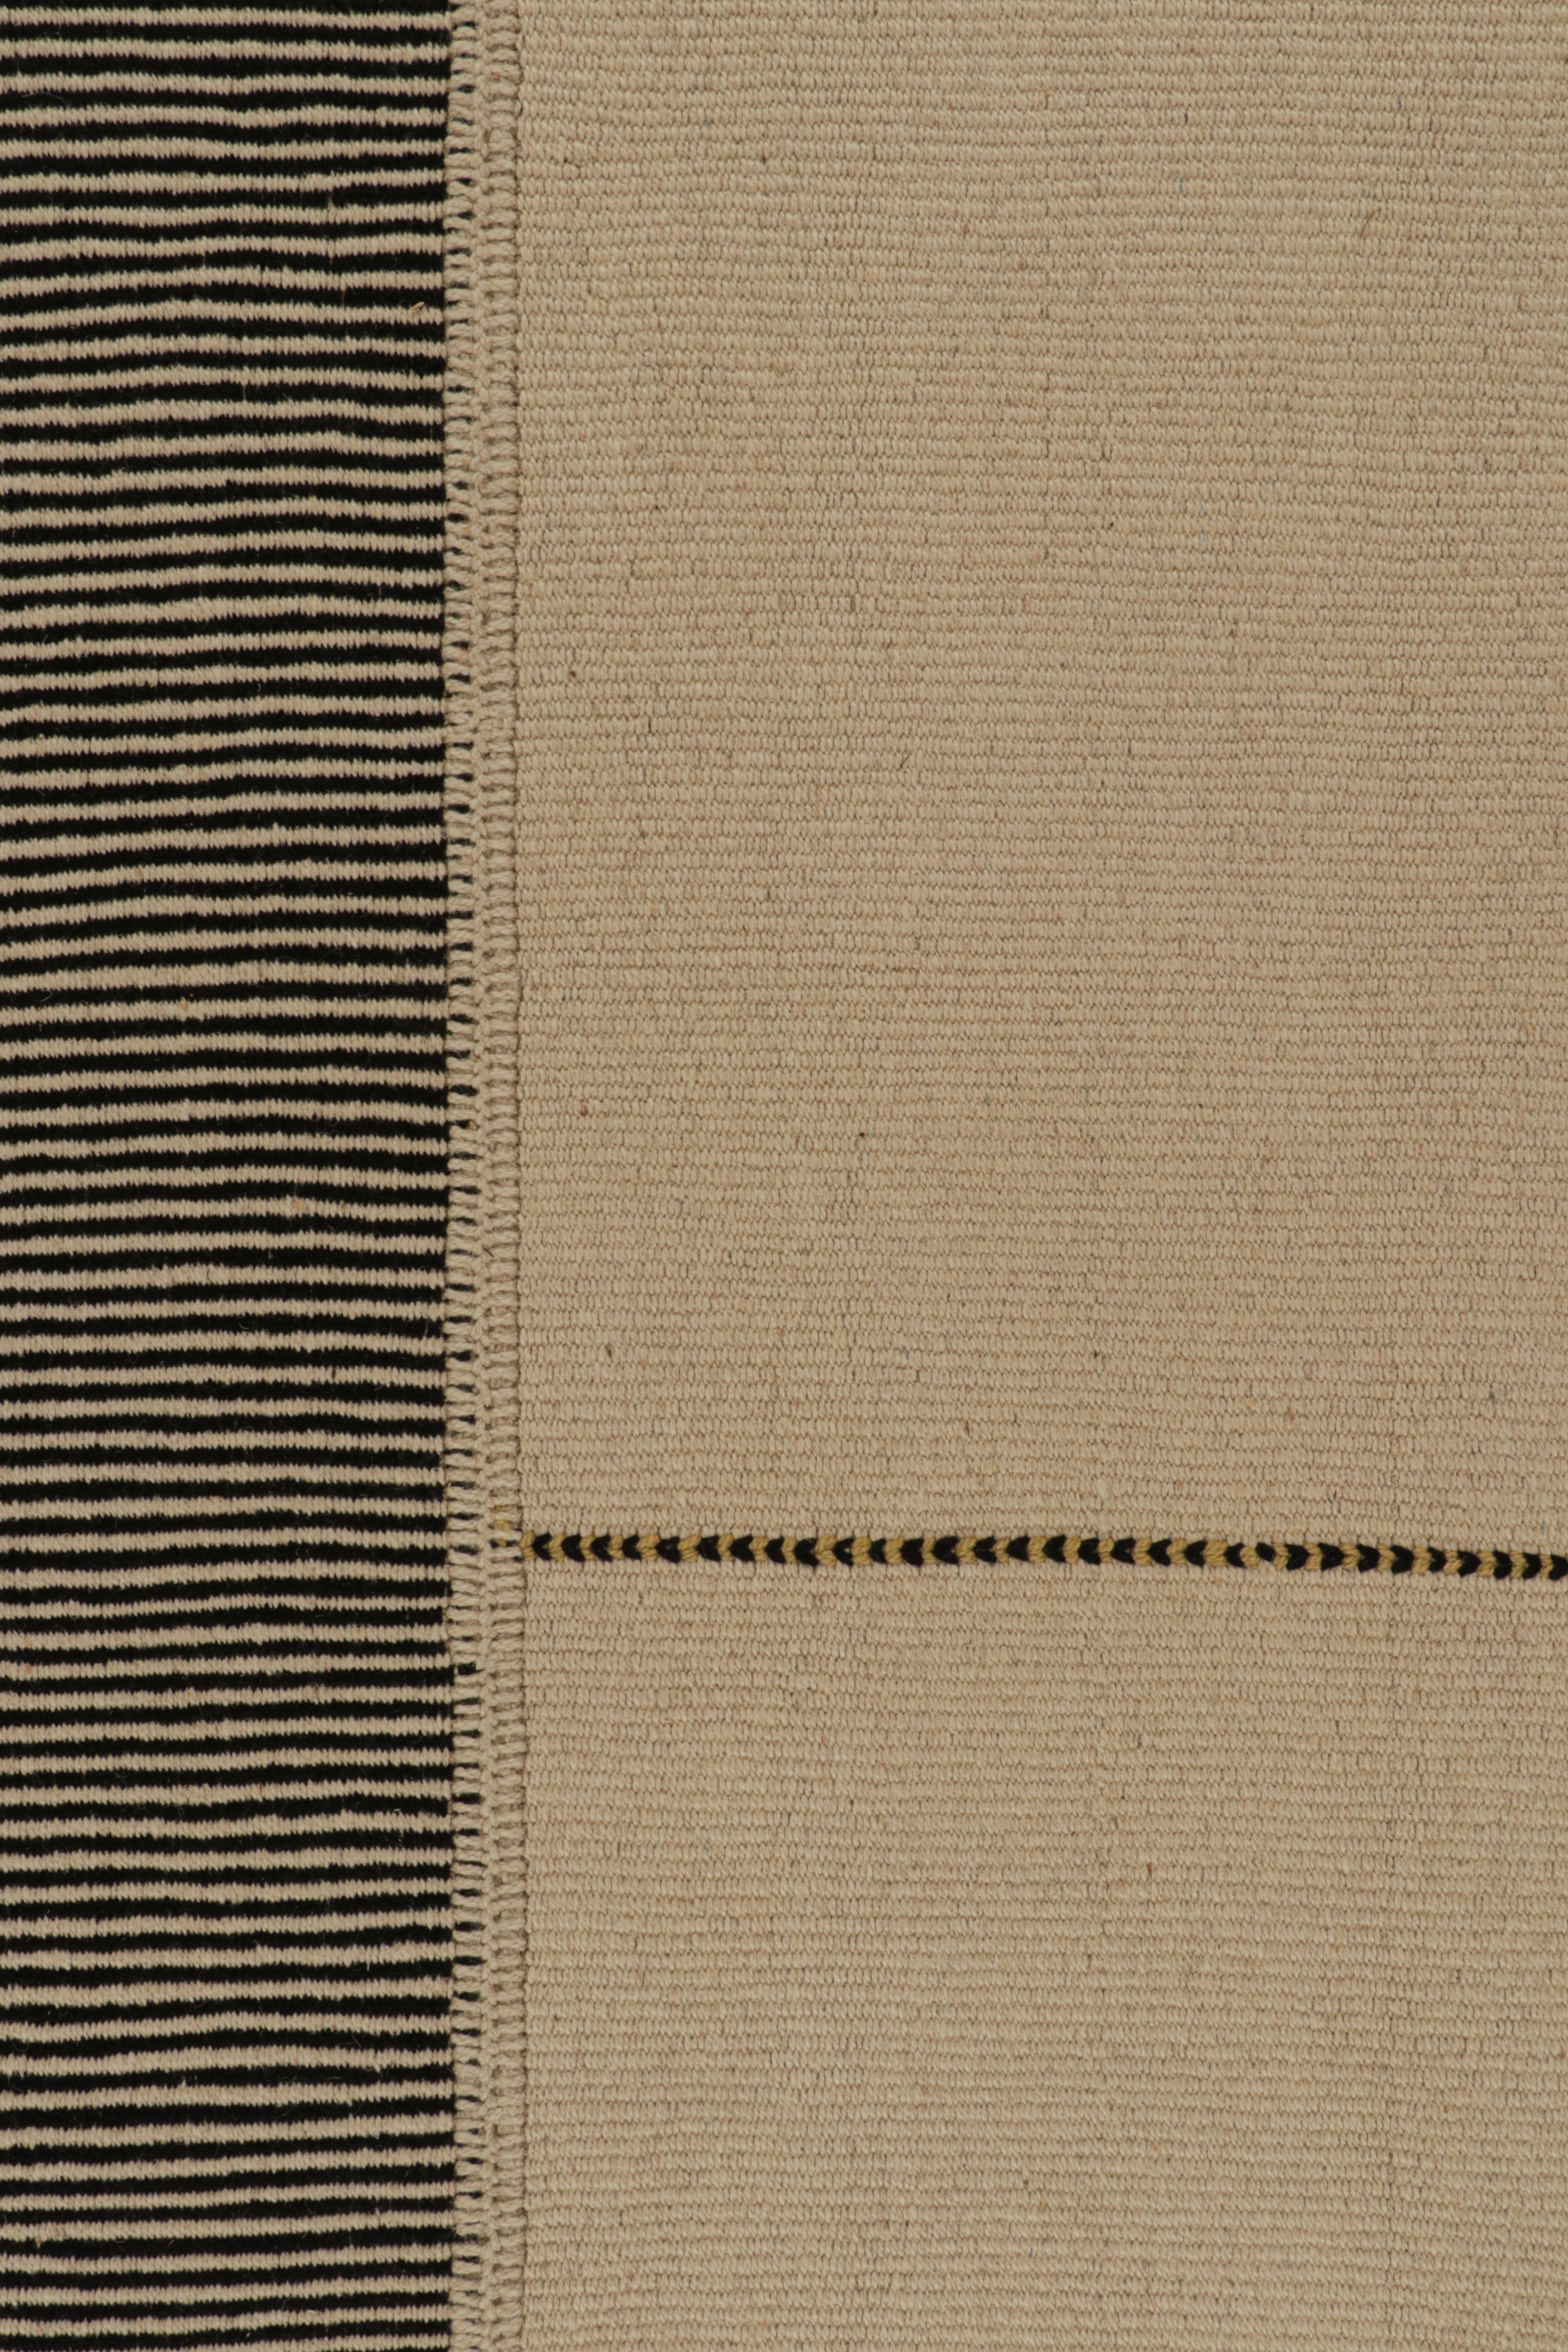 Contemporary Rug & Kilim’s Modern Kilim Rug in Beige, Black & Gold Textural Stripes  For Sale